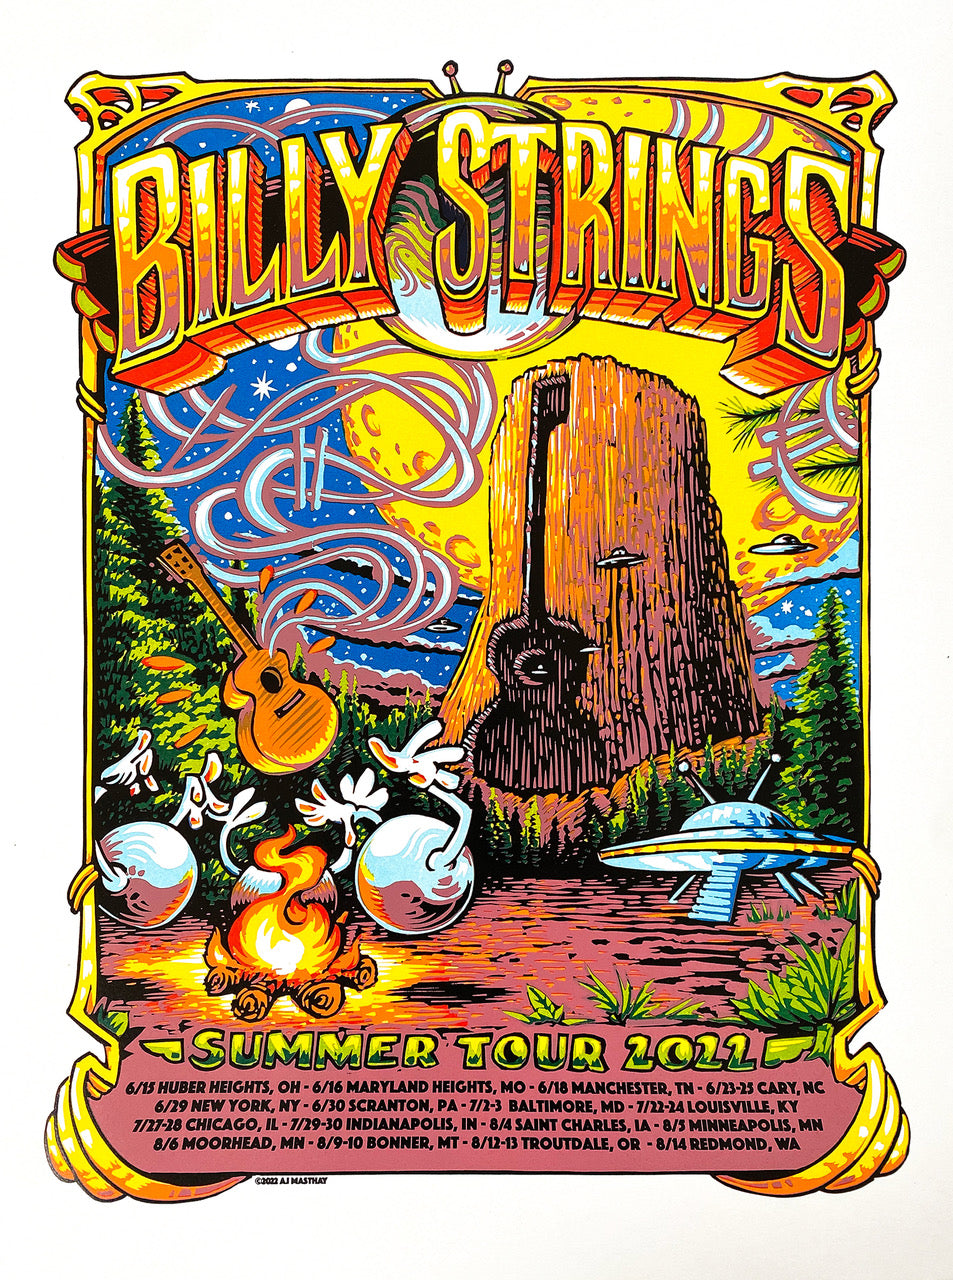 AJ Masthay "Billy Strings Summer Tour 2022"